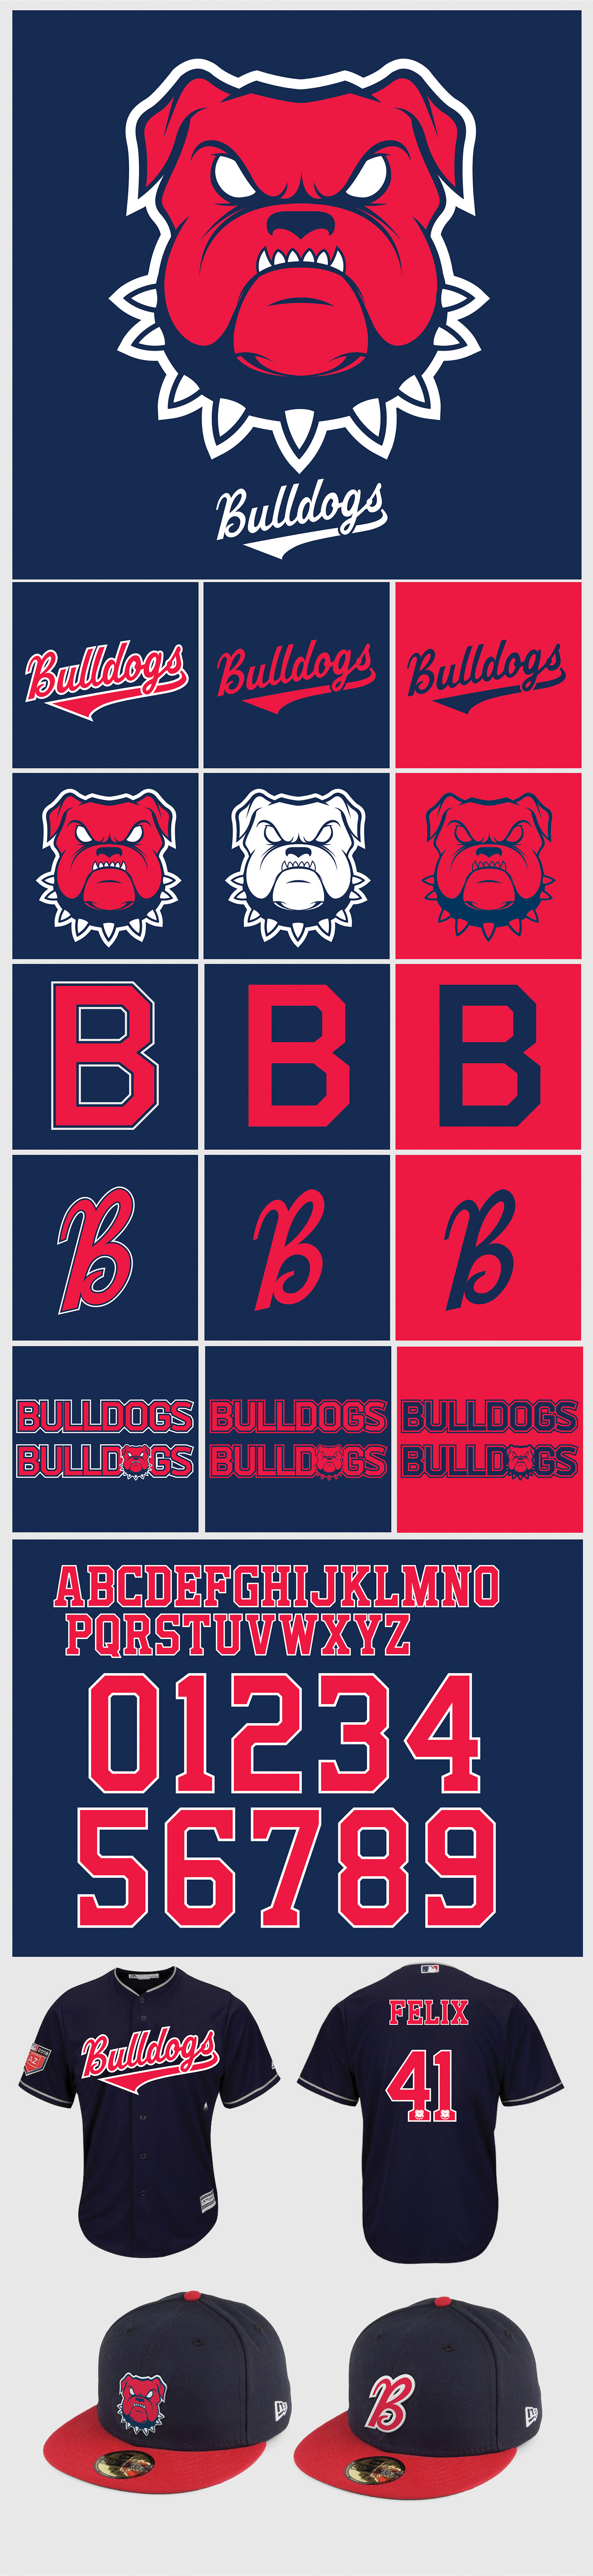 bulldogs softball baseball team logo